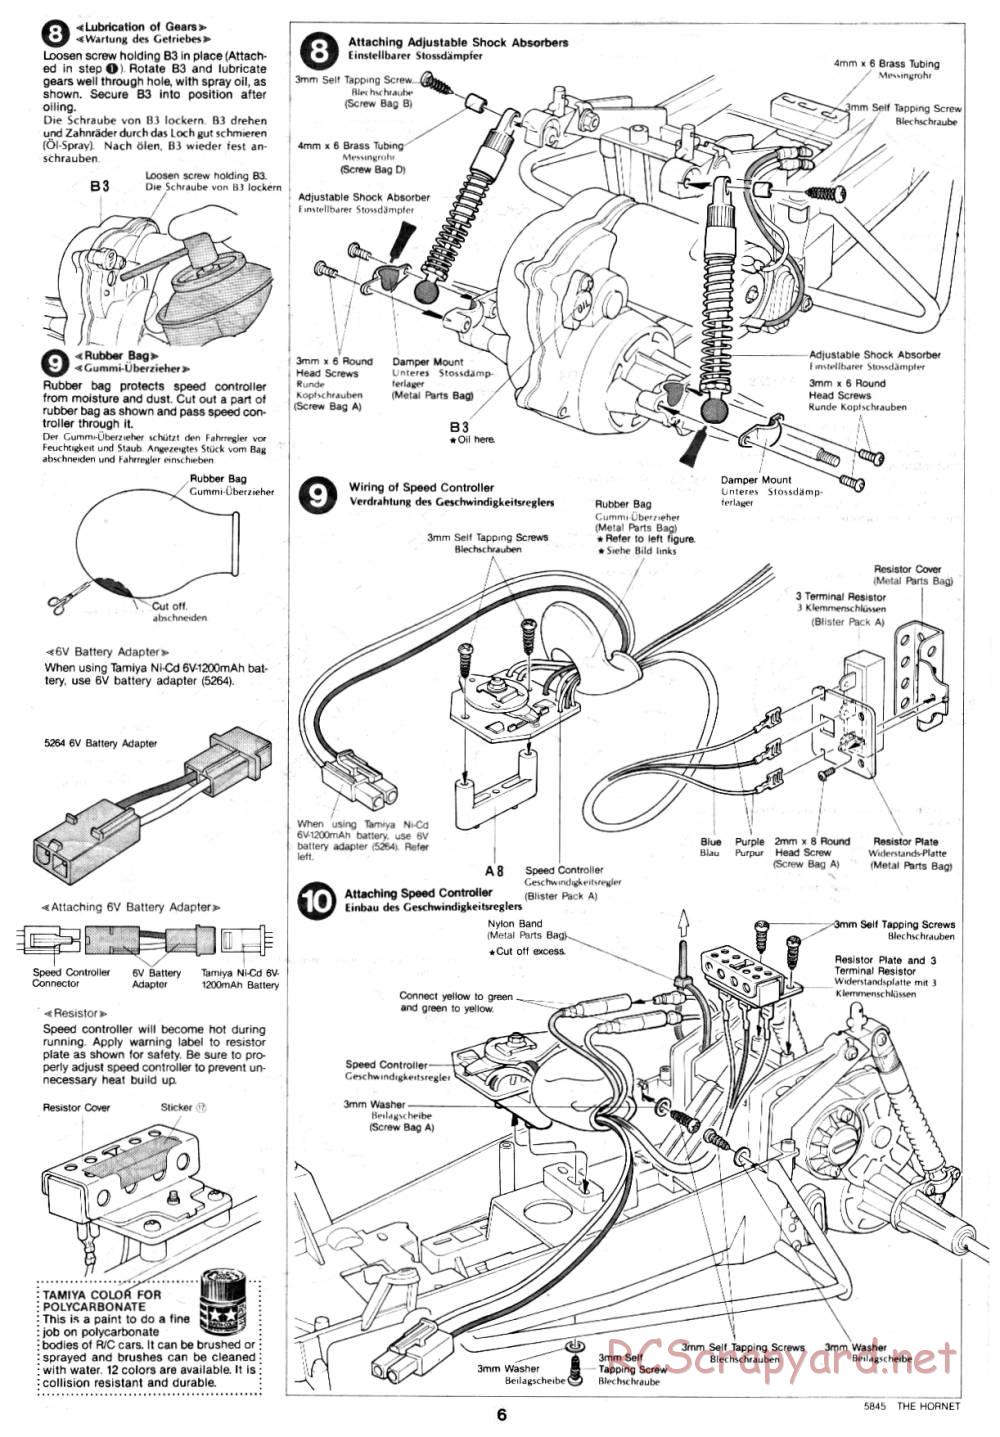 Tamiya - The Hornet - 58045 - Manual - Page 6